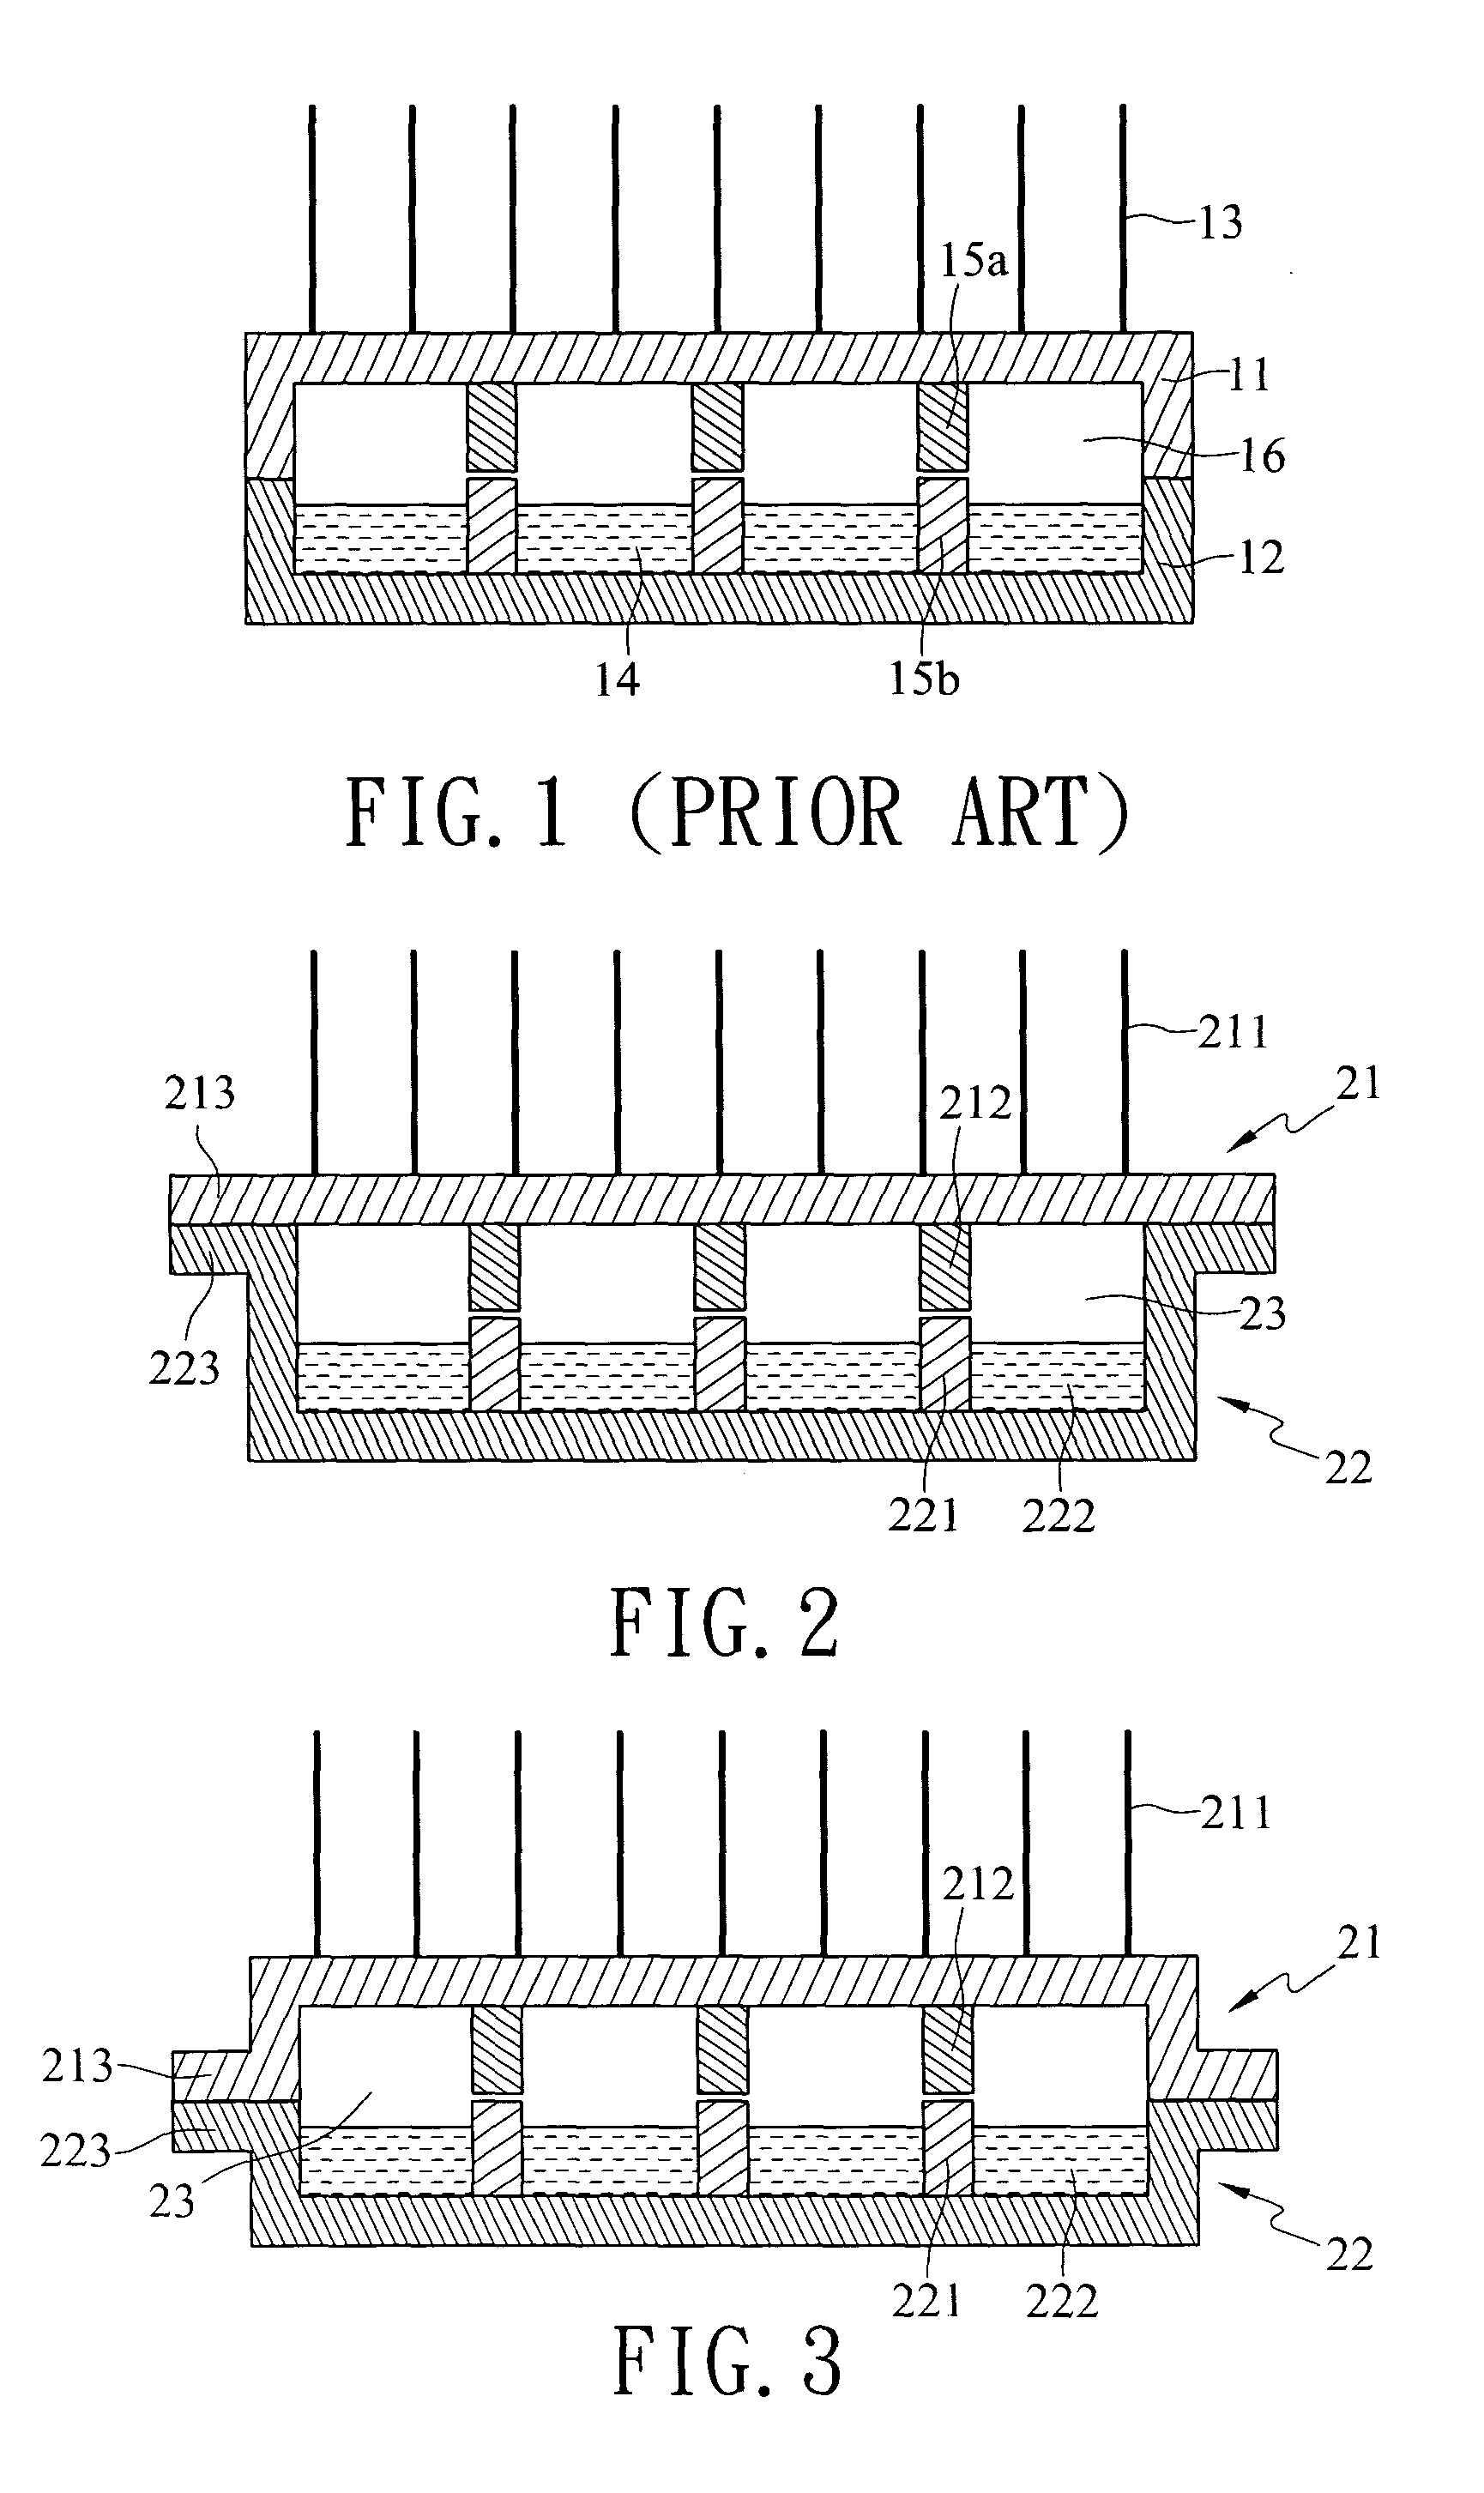 Plate evaporator